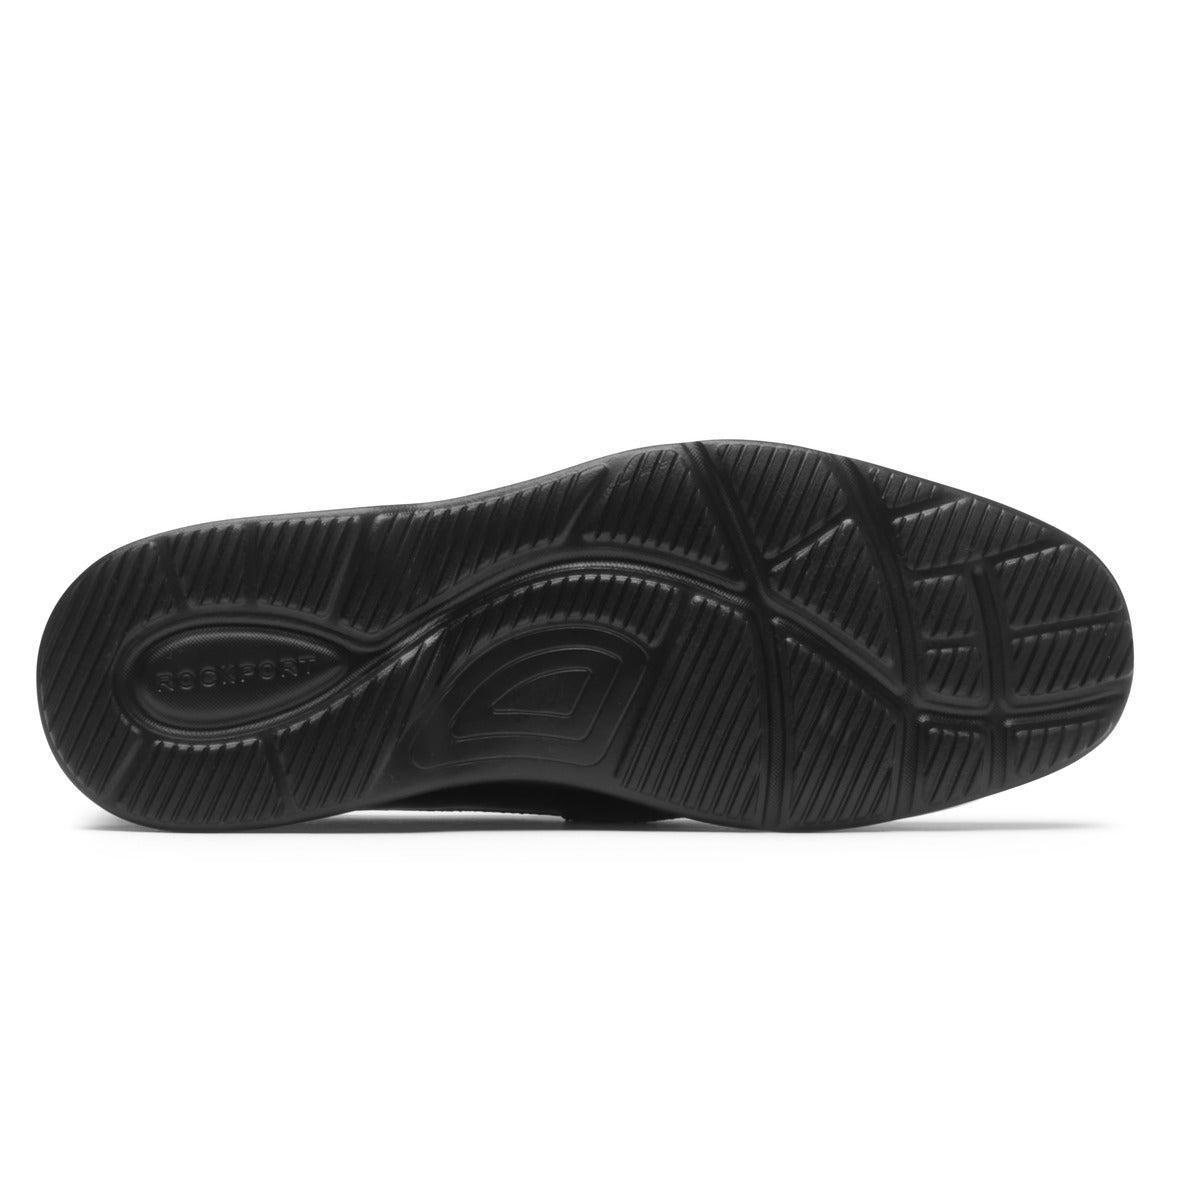 Johnston & Murphy Henson XC4 Waterproof Chukka Boot Product Image